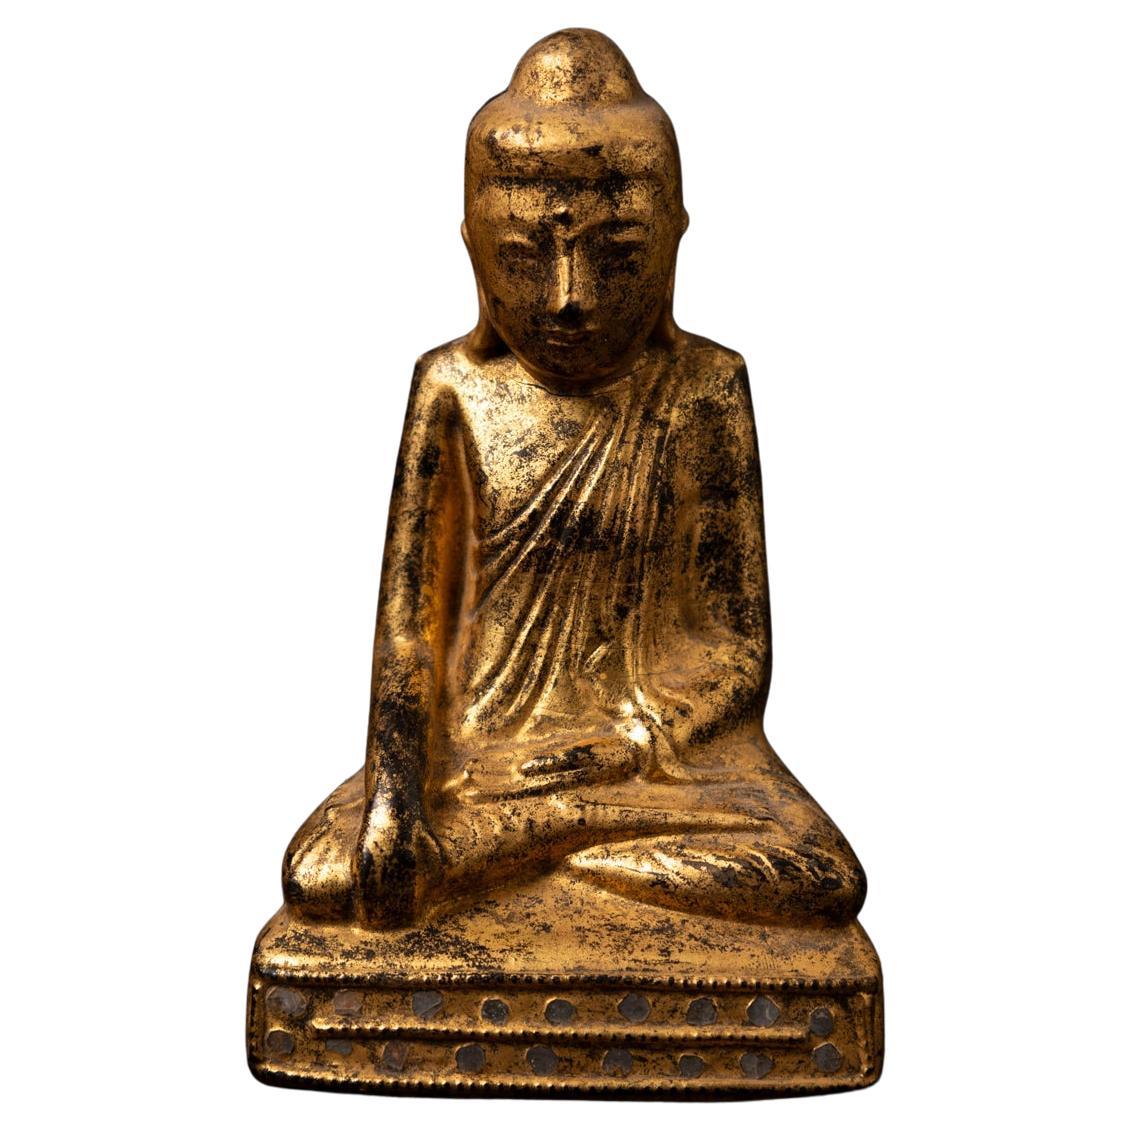 Antike burmesische Lotus-Buddha-Statue aus Holz aus dem 19. Jahrhundert in Bhumisparsha Mudra